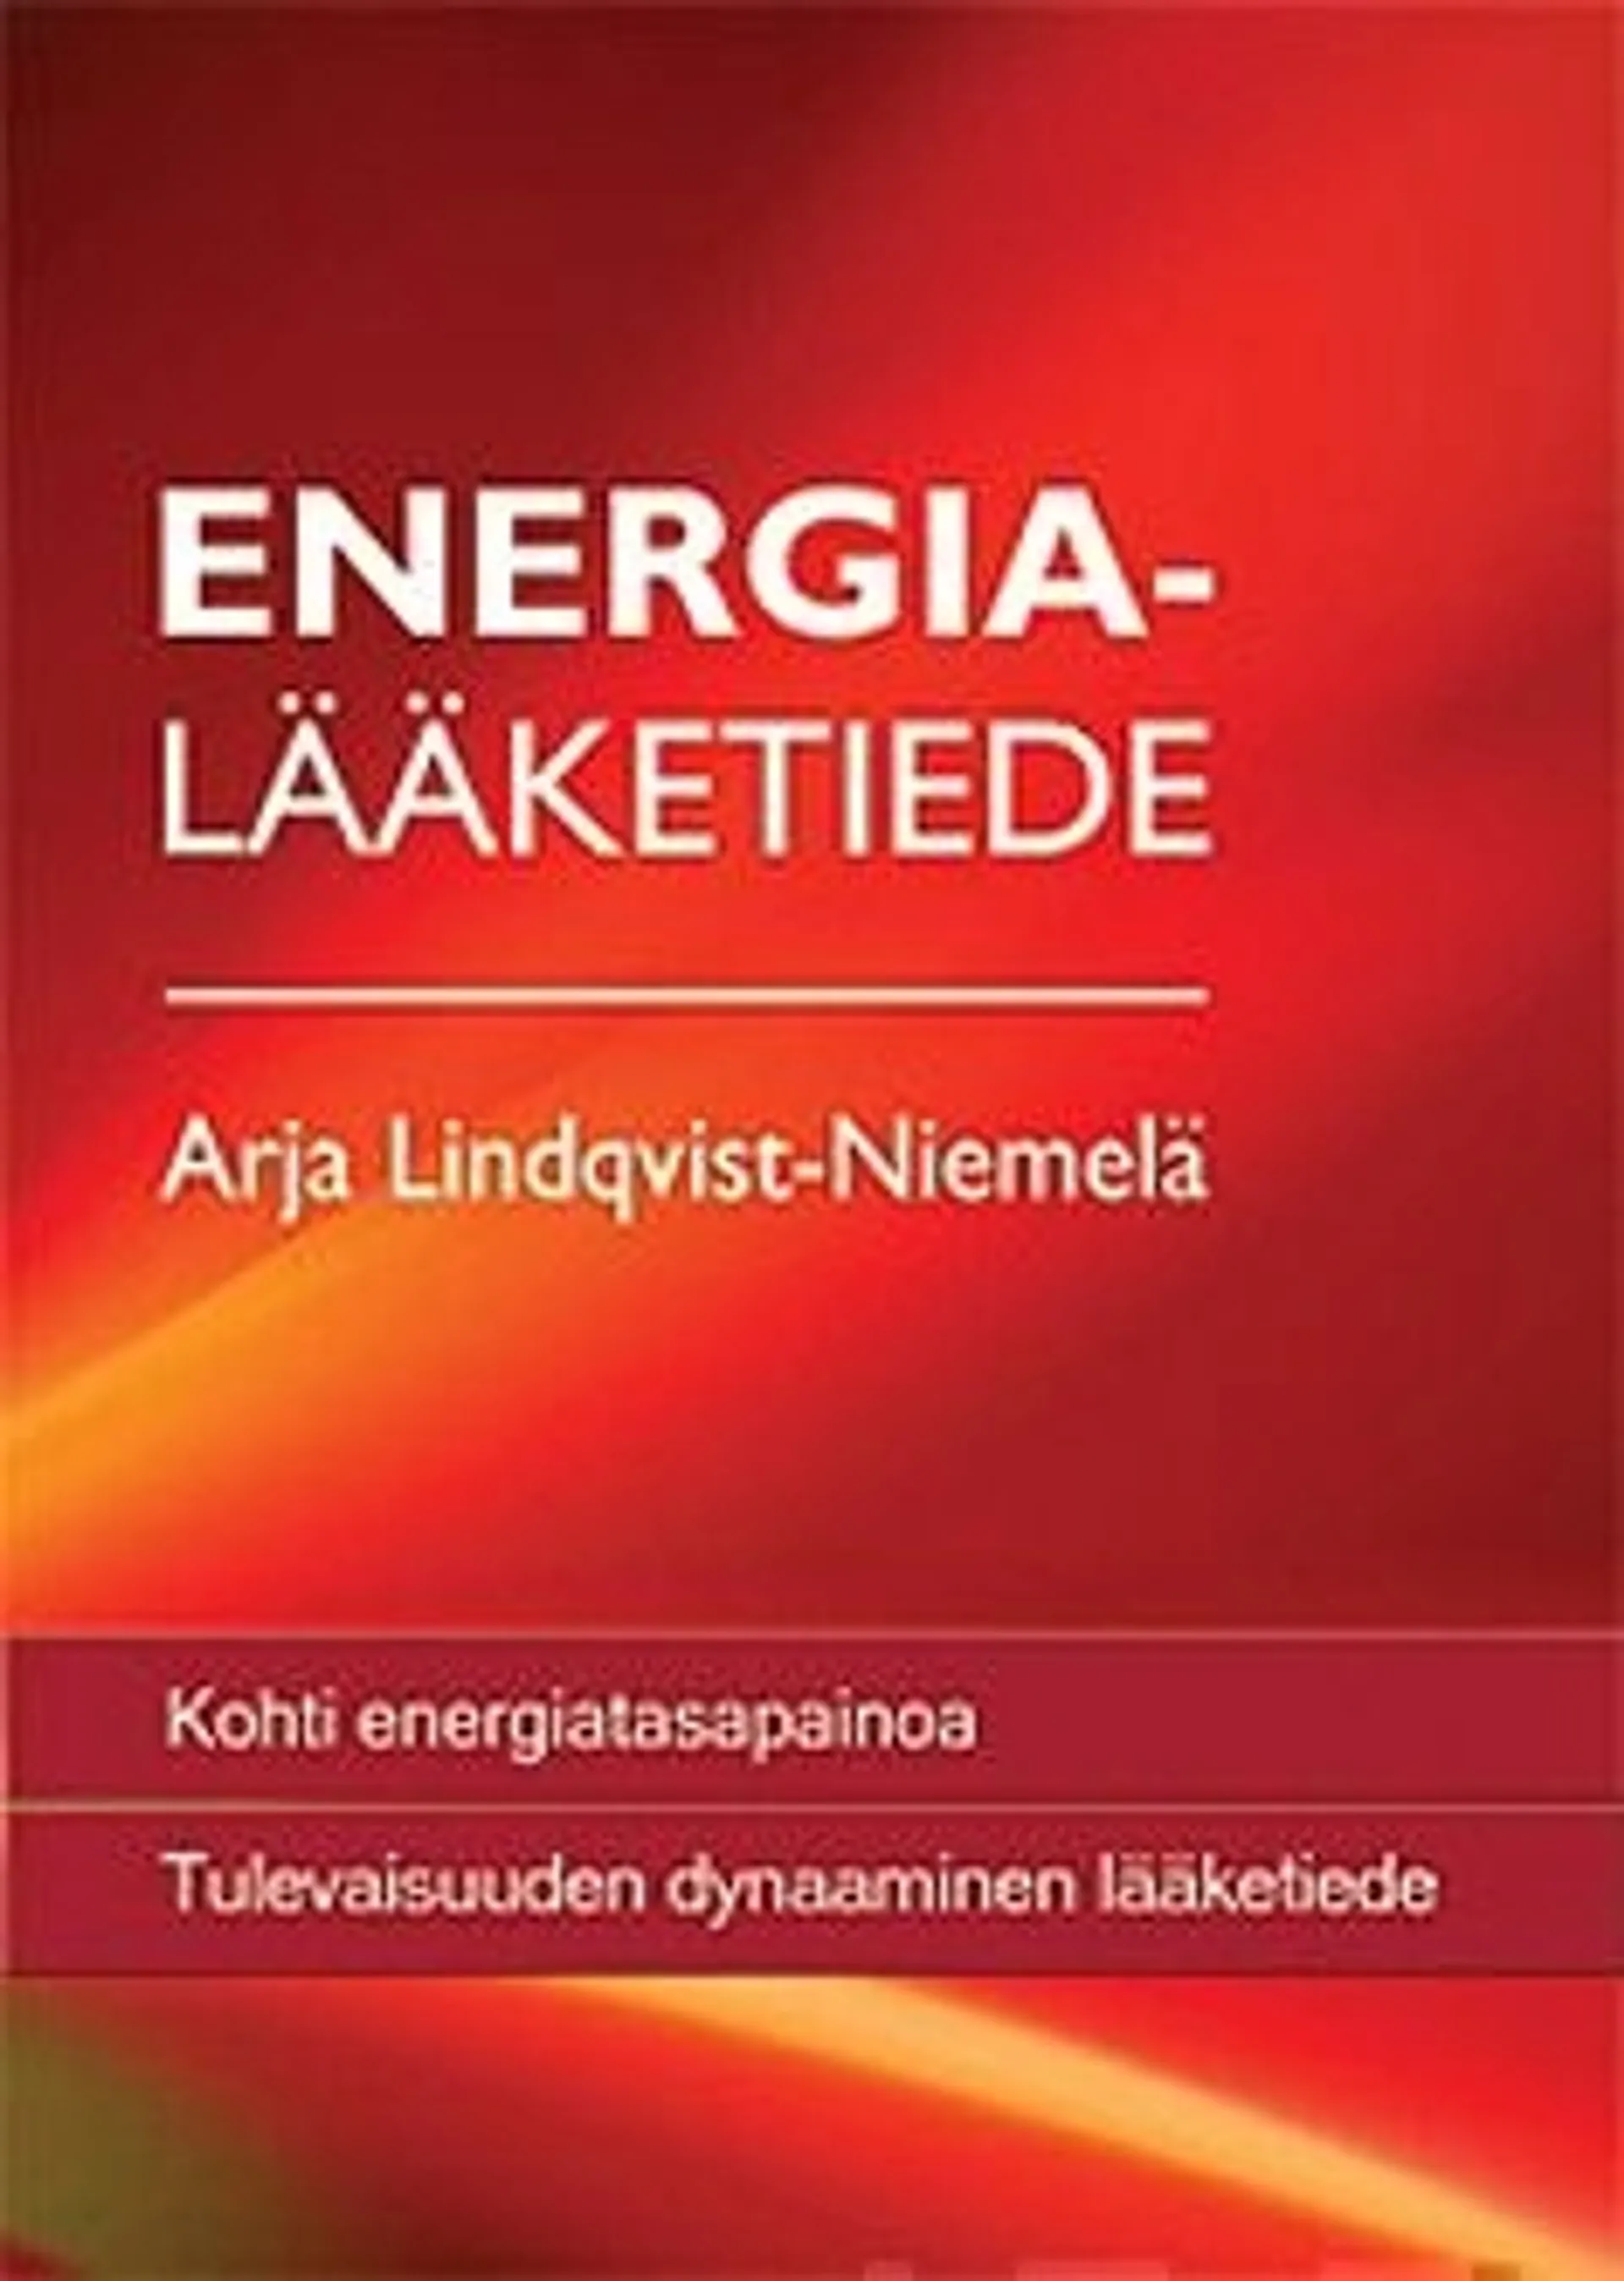 Lindqvist-Niemelä, Energialääketiede